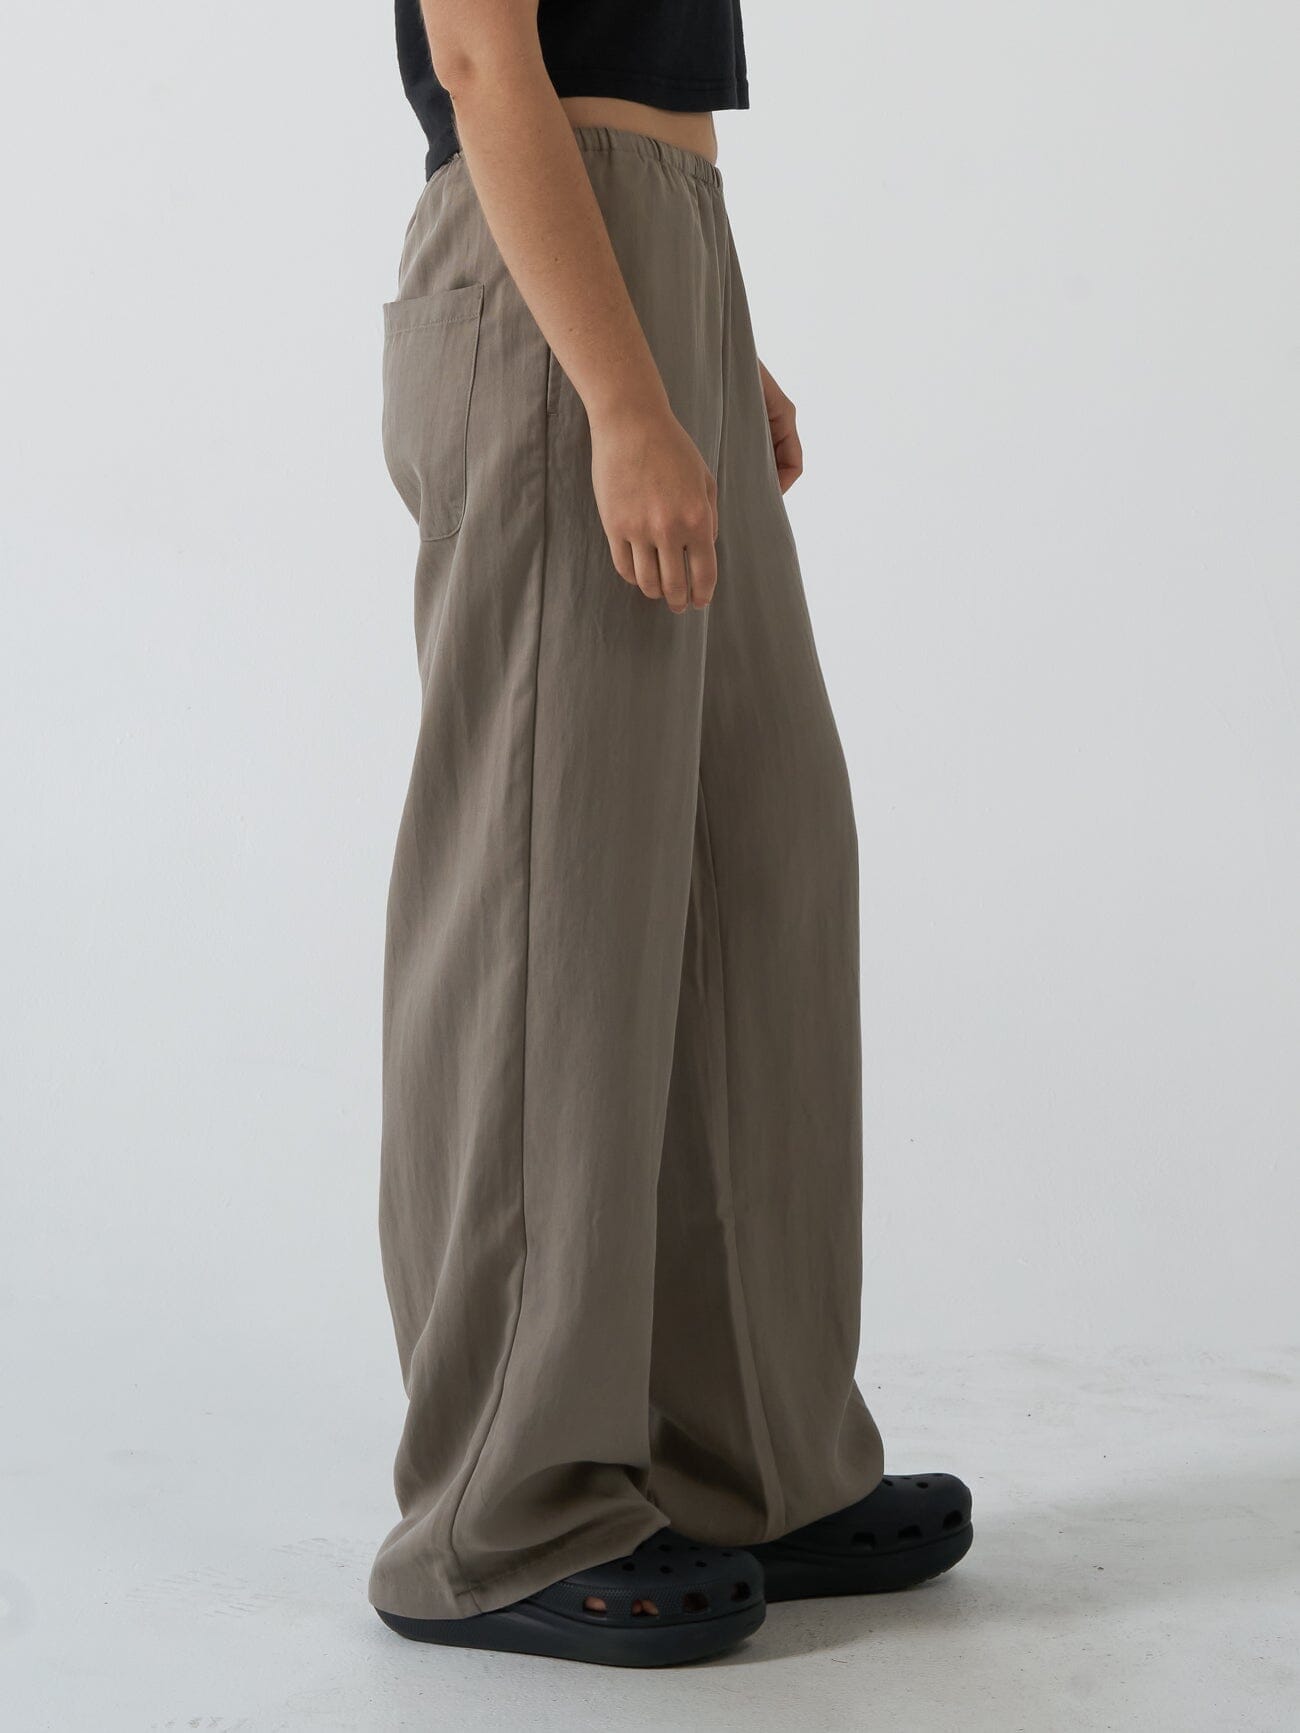 Poetry Wide Leg 100% Linen Trousers Women Size 12 Light Gray Pants Boho  Comfort | eBay